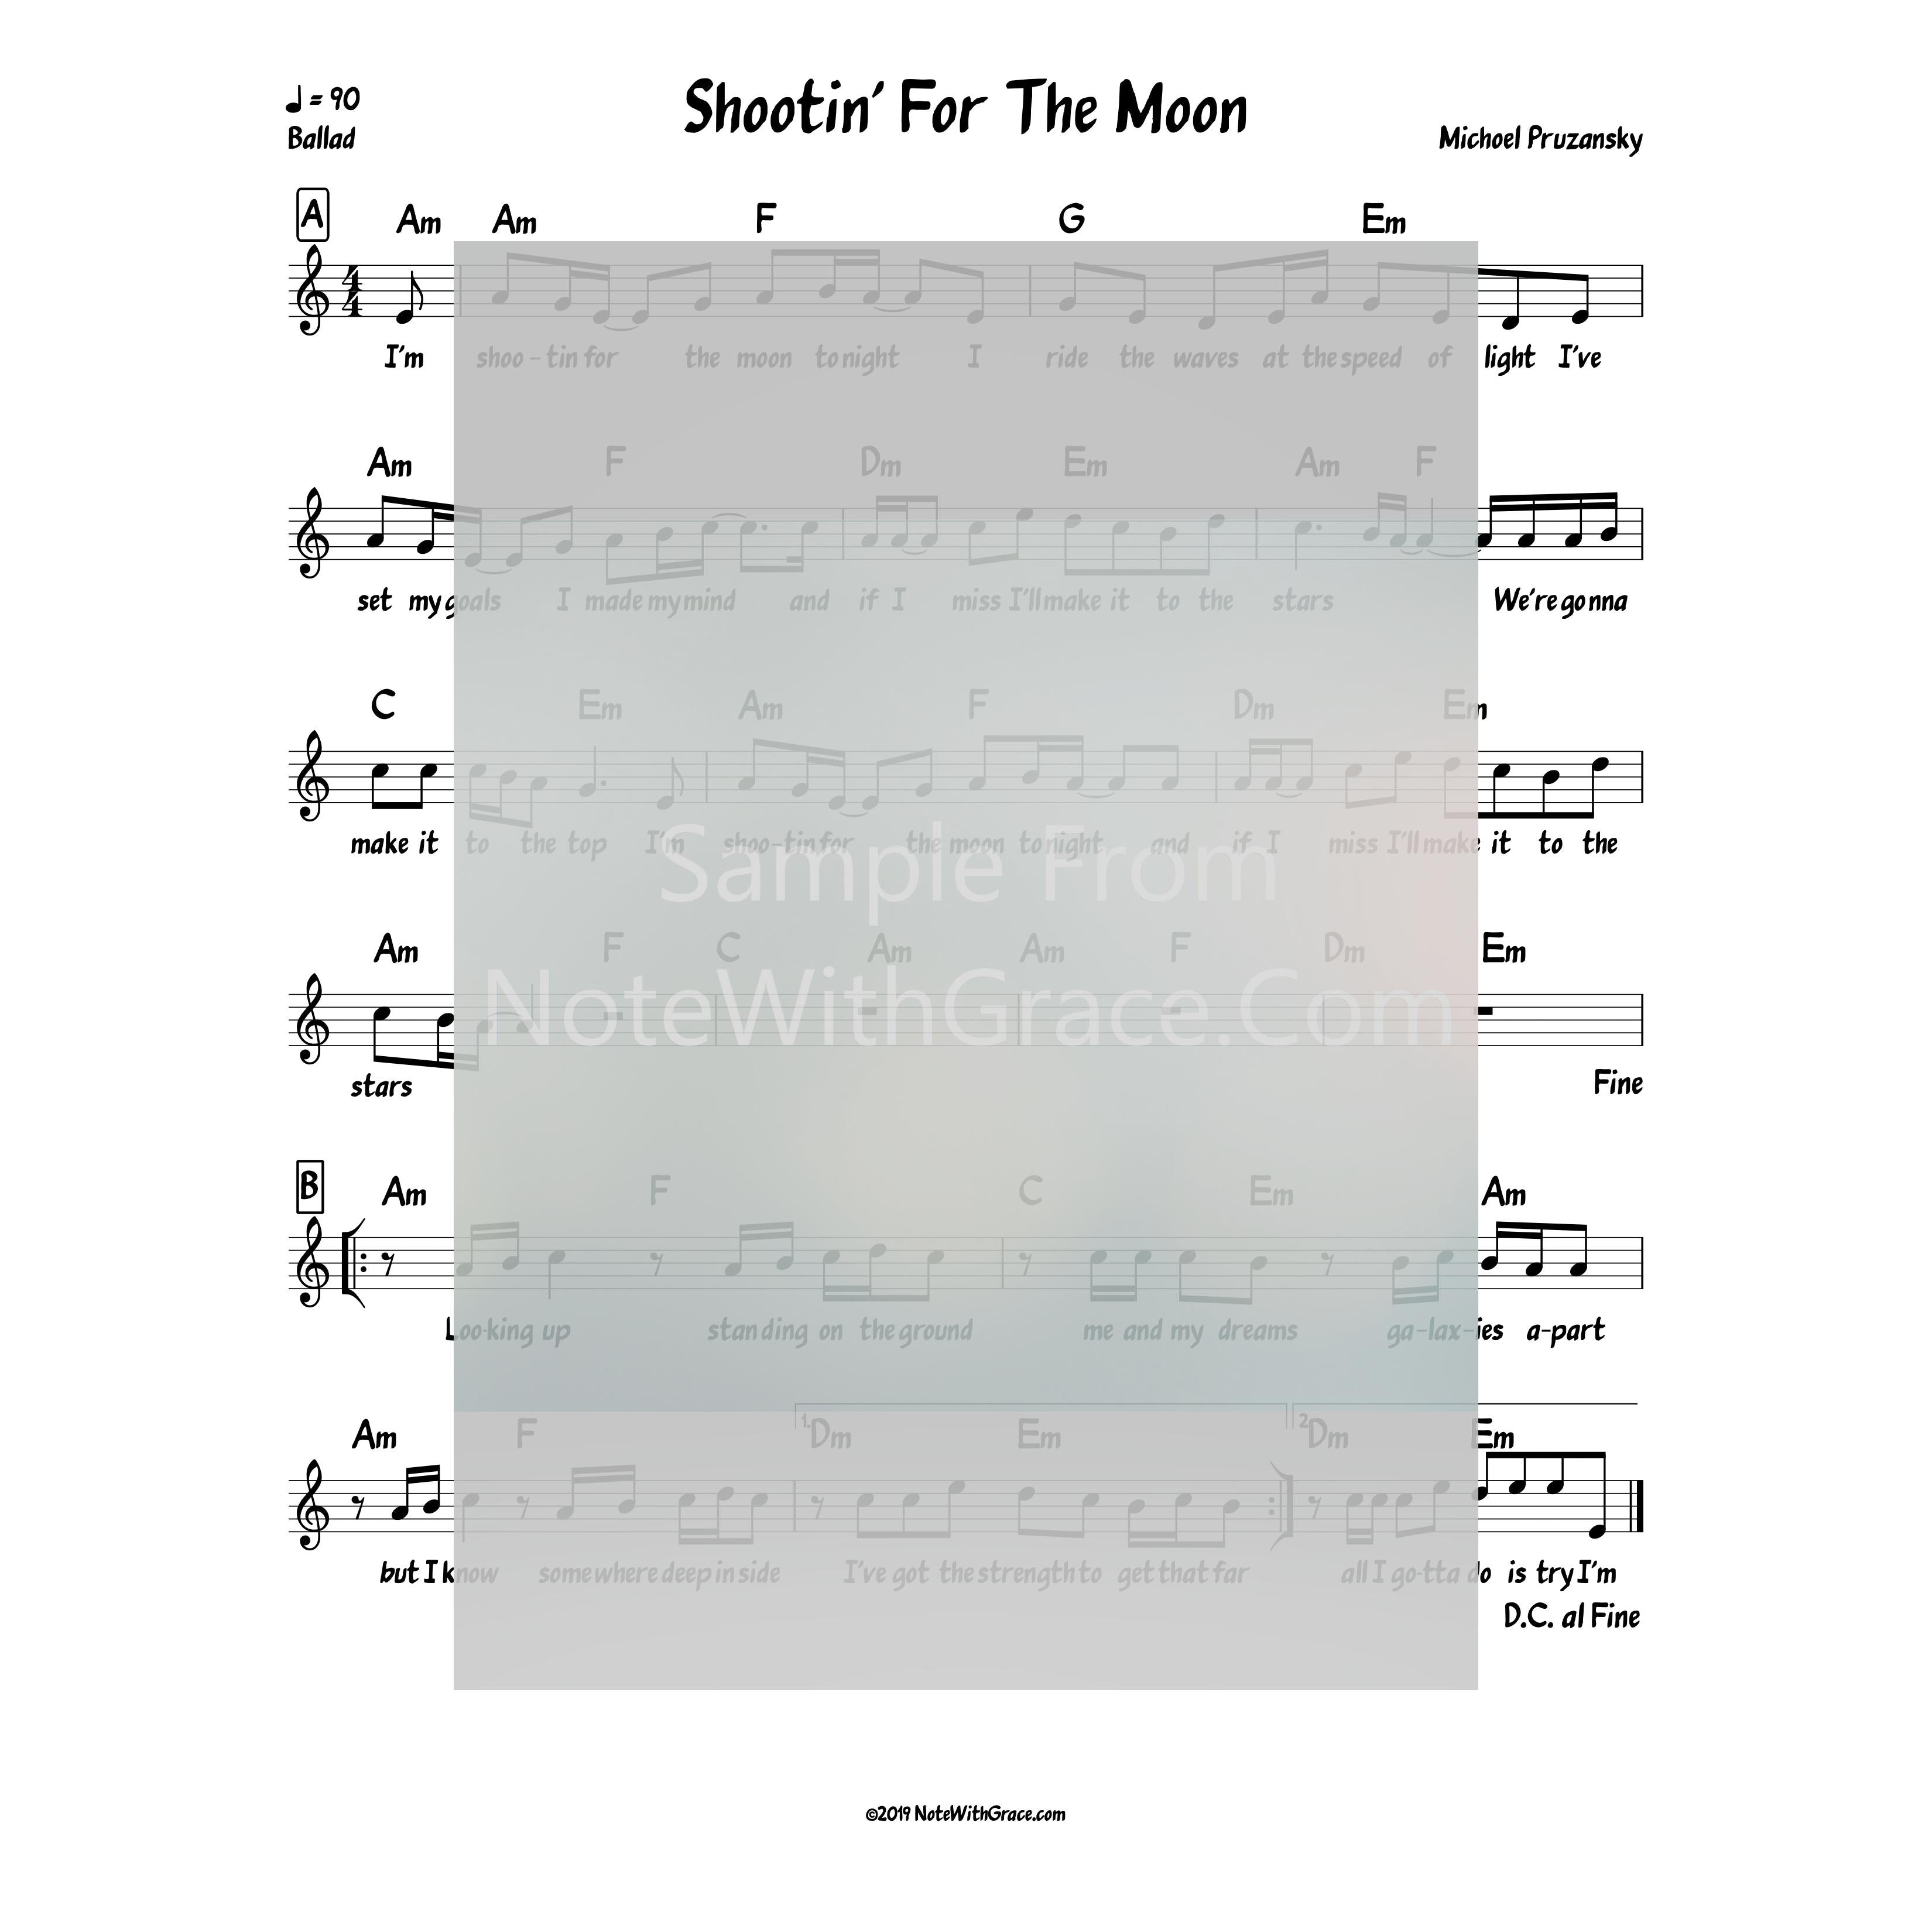 Shootin' For The Moon Tonight Lead Sheet (Michoel Pruzansky) Shootin' for the Moon-Sheet music-NoteWithGrace.com